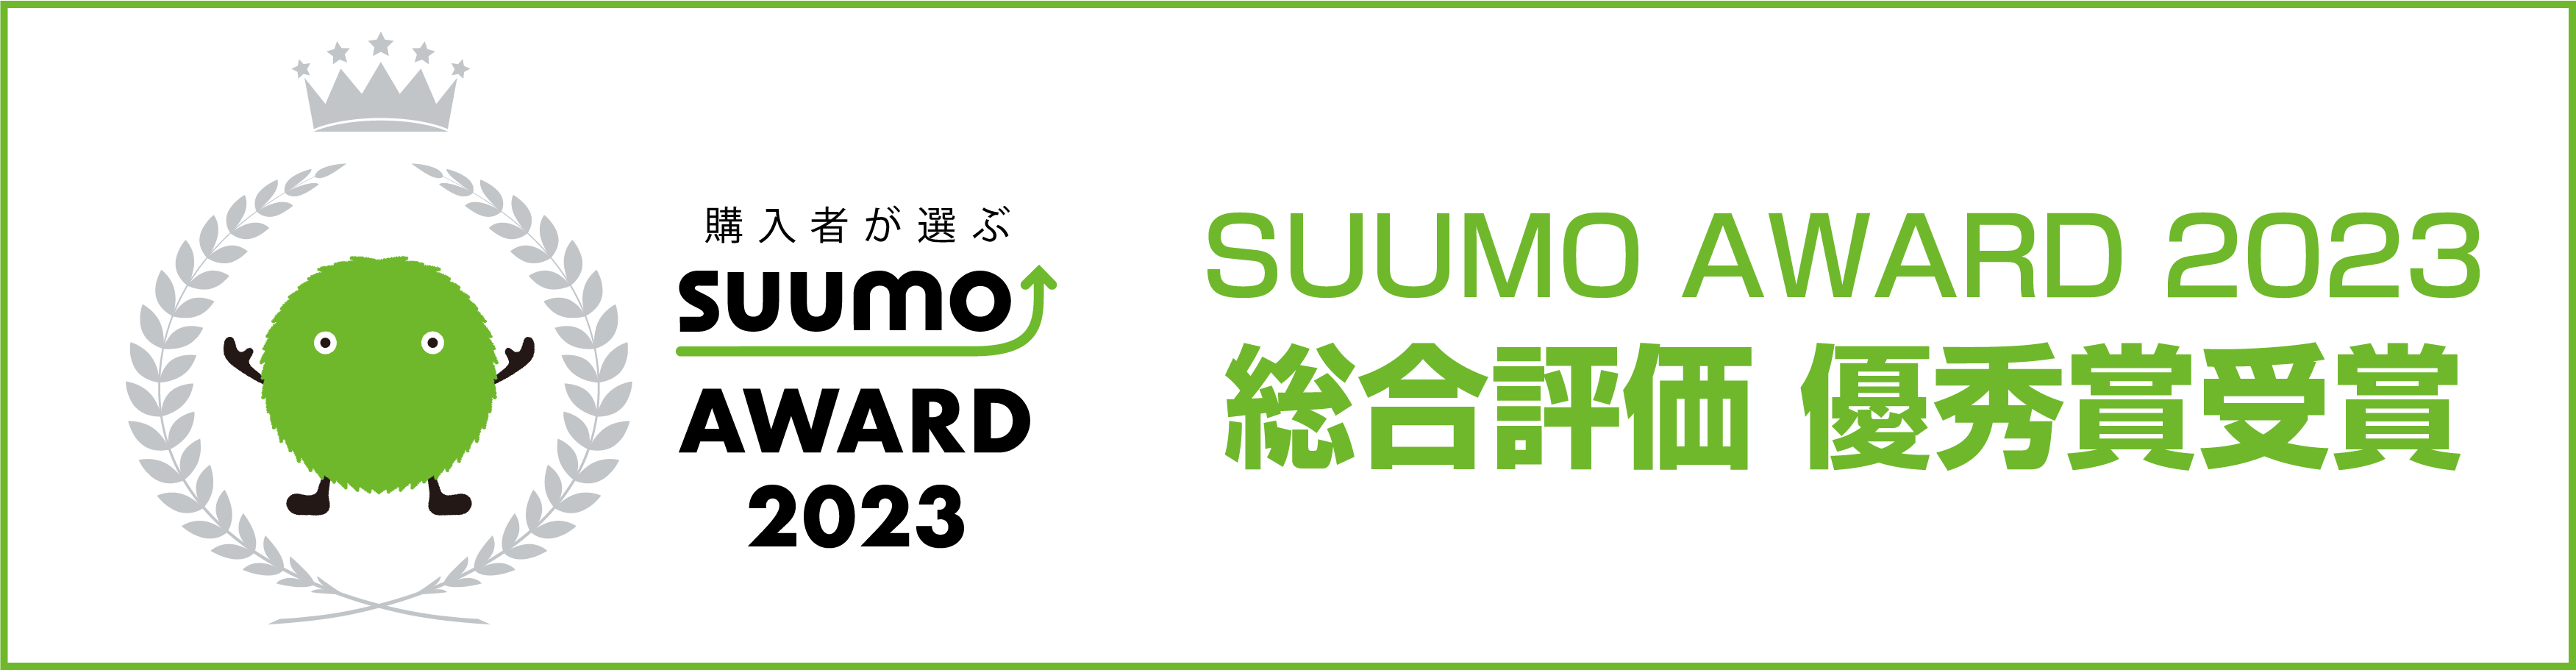 SUUMOAWARD2023総合評価優秀賞受賞